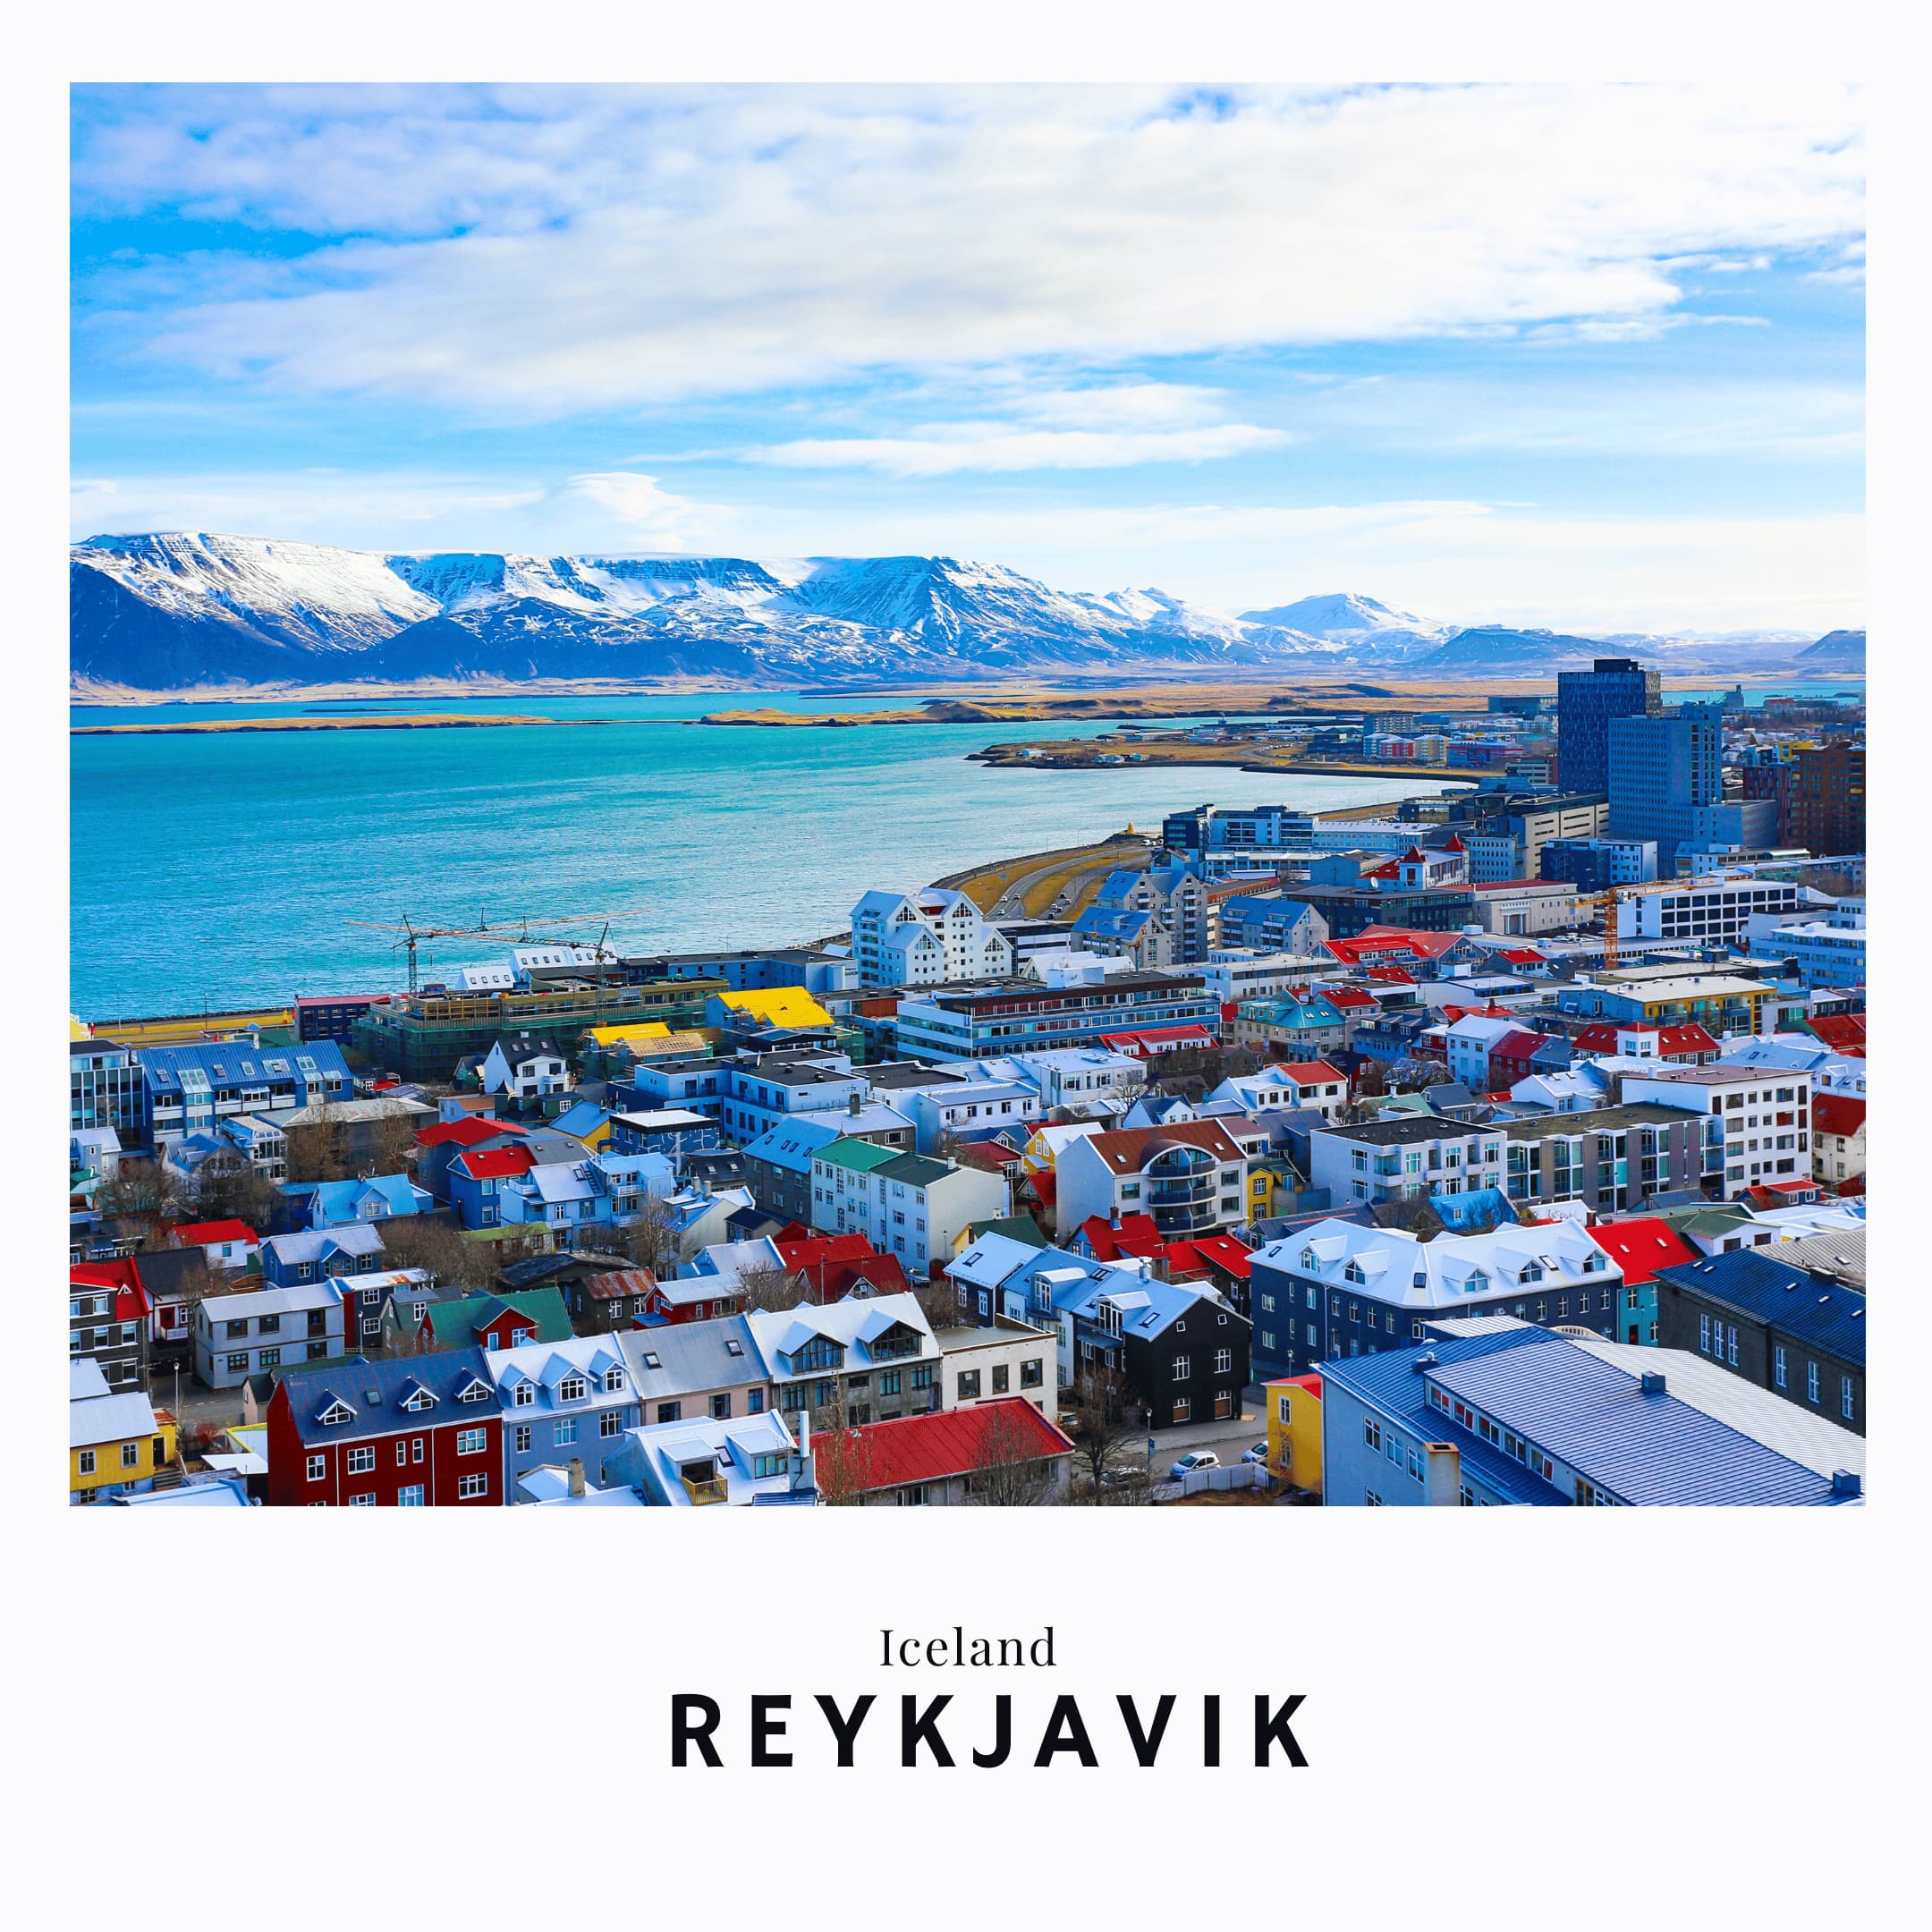 Link to Reykjavik travel guide in Iceland